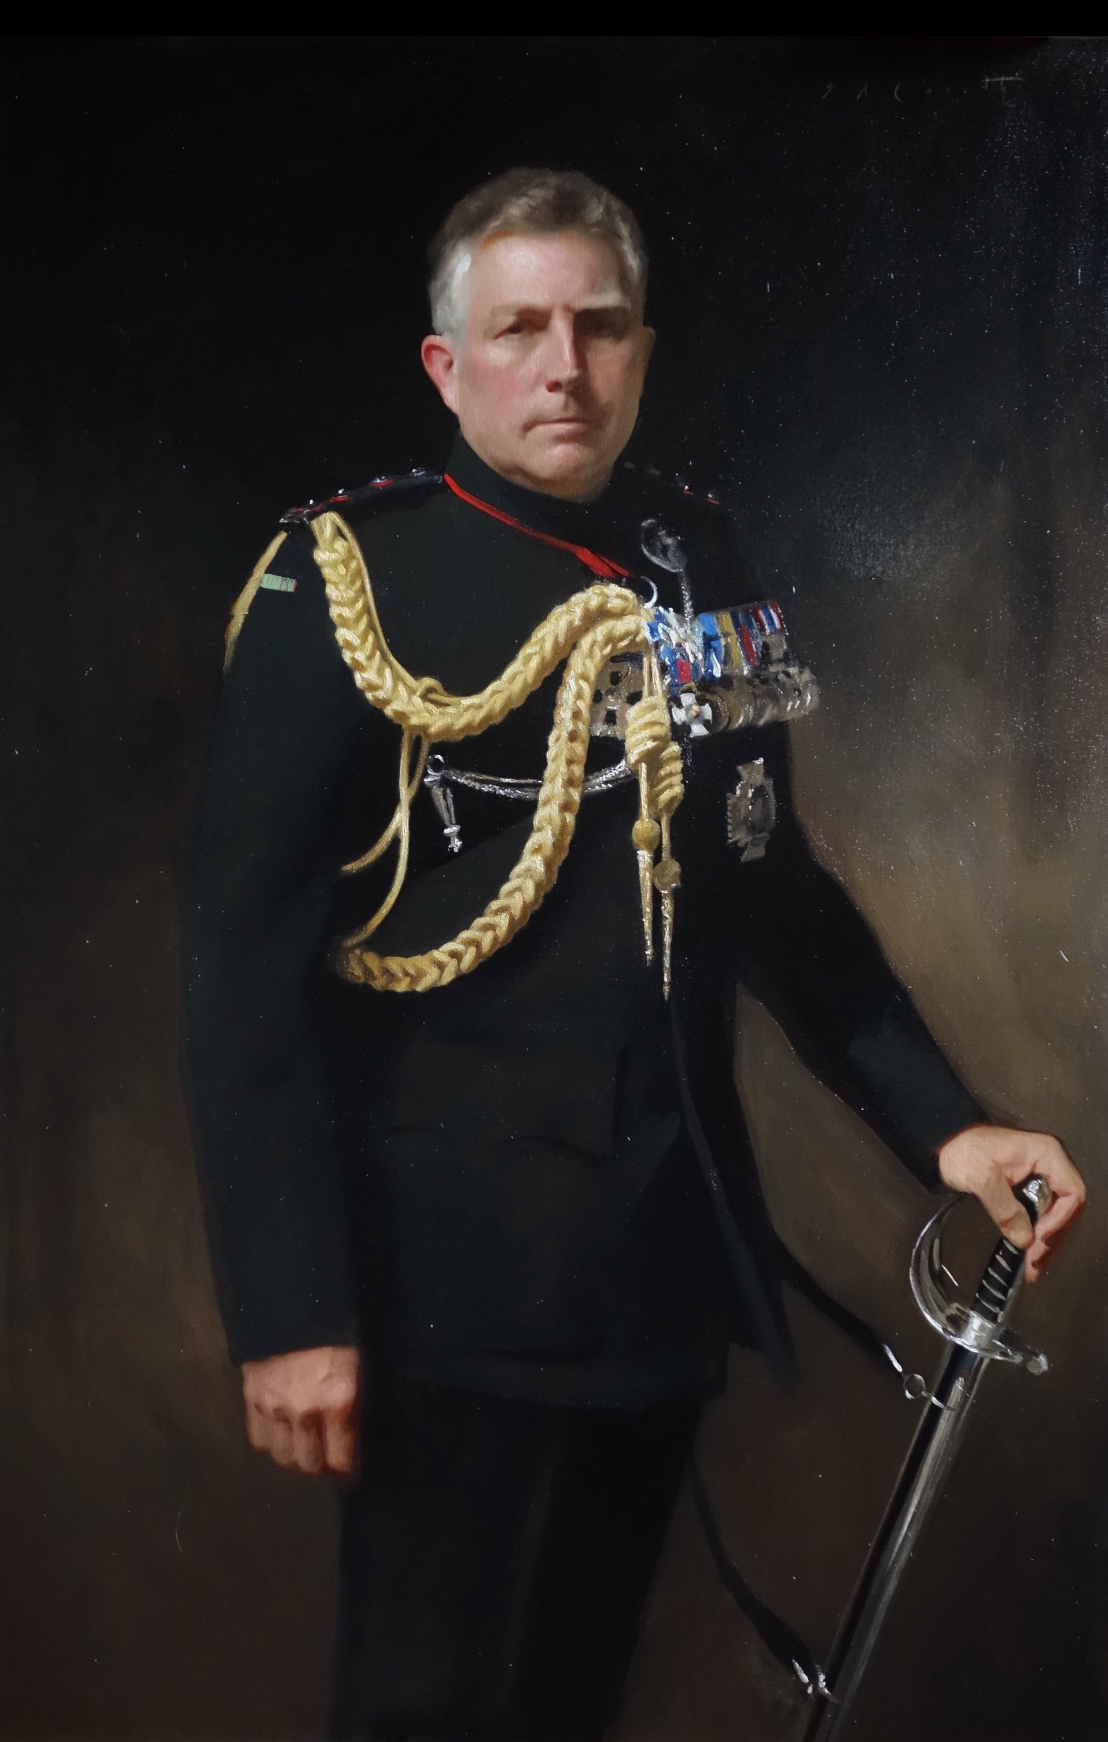 General Sir Nicholas Carter, GCB, CBE, DSO, 2018